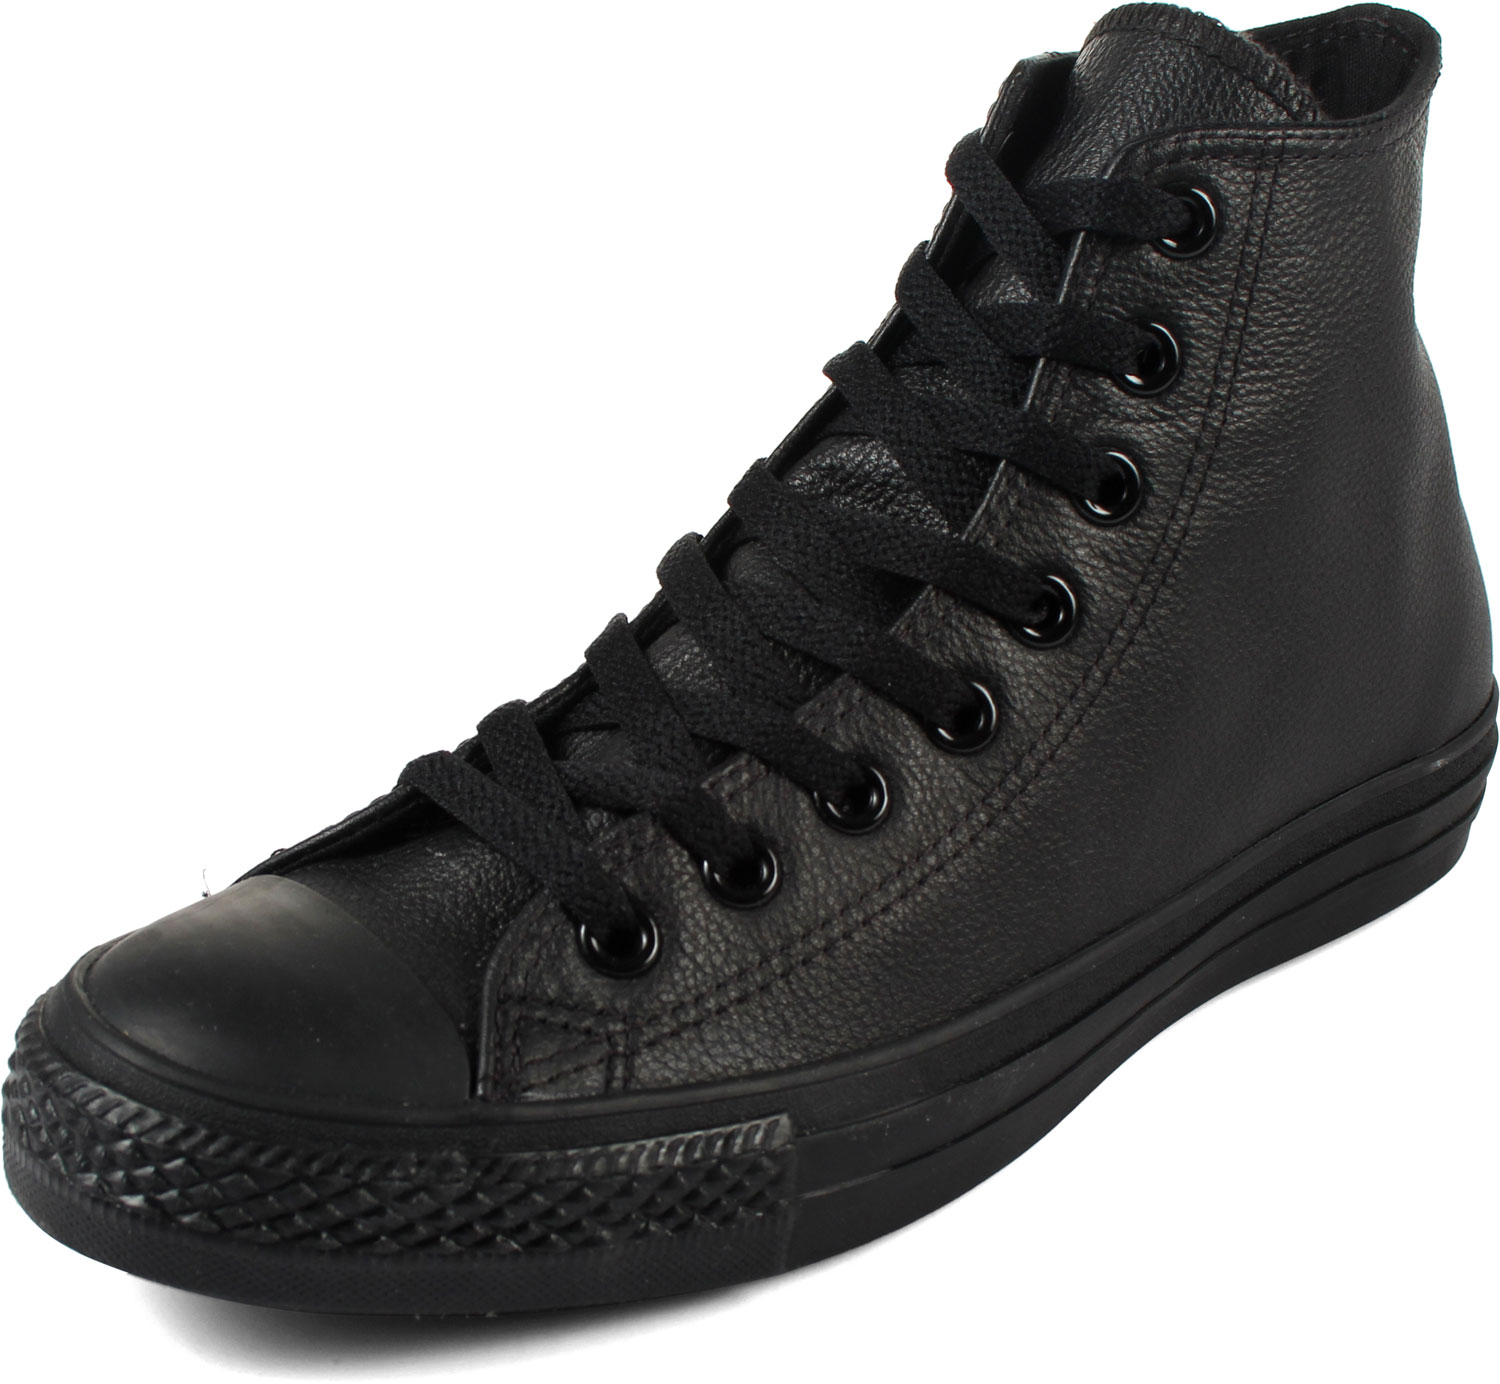 converse black leather shoes